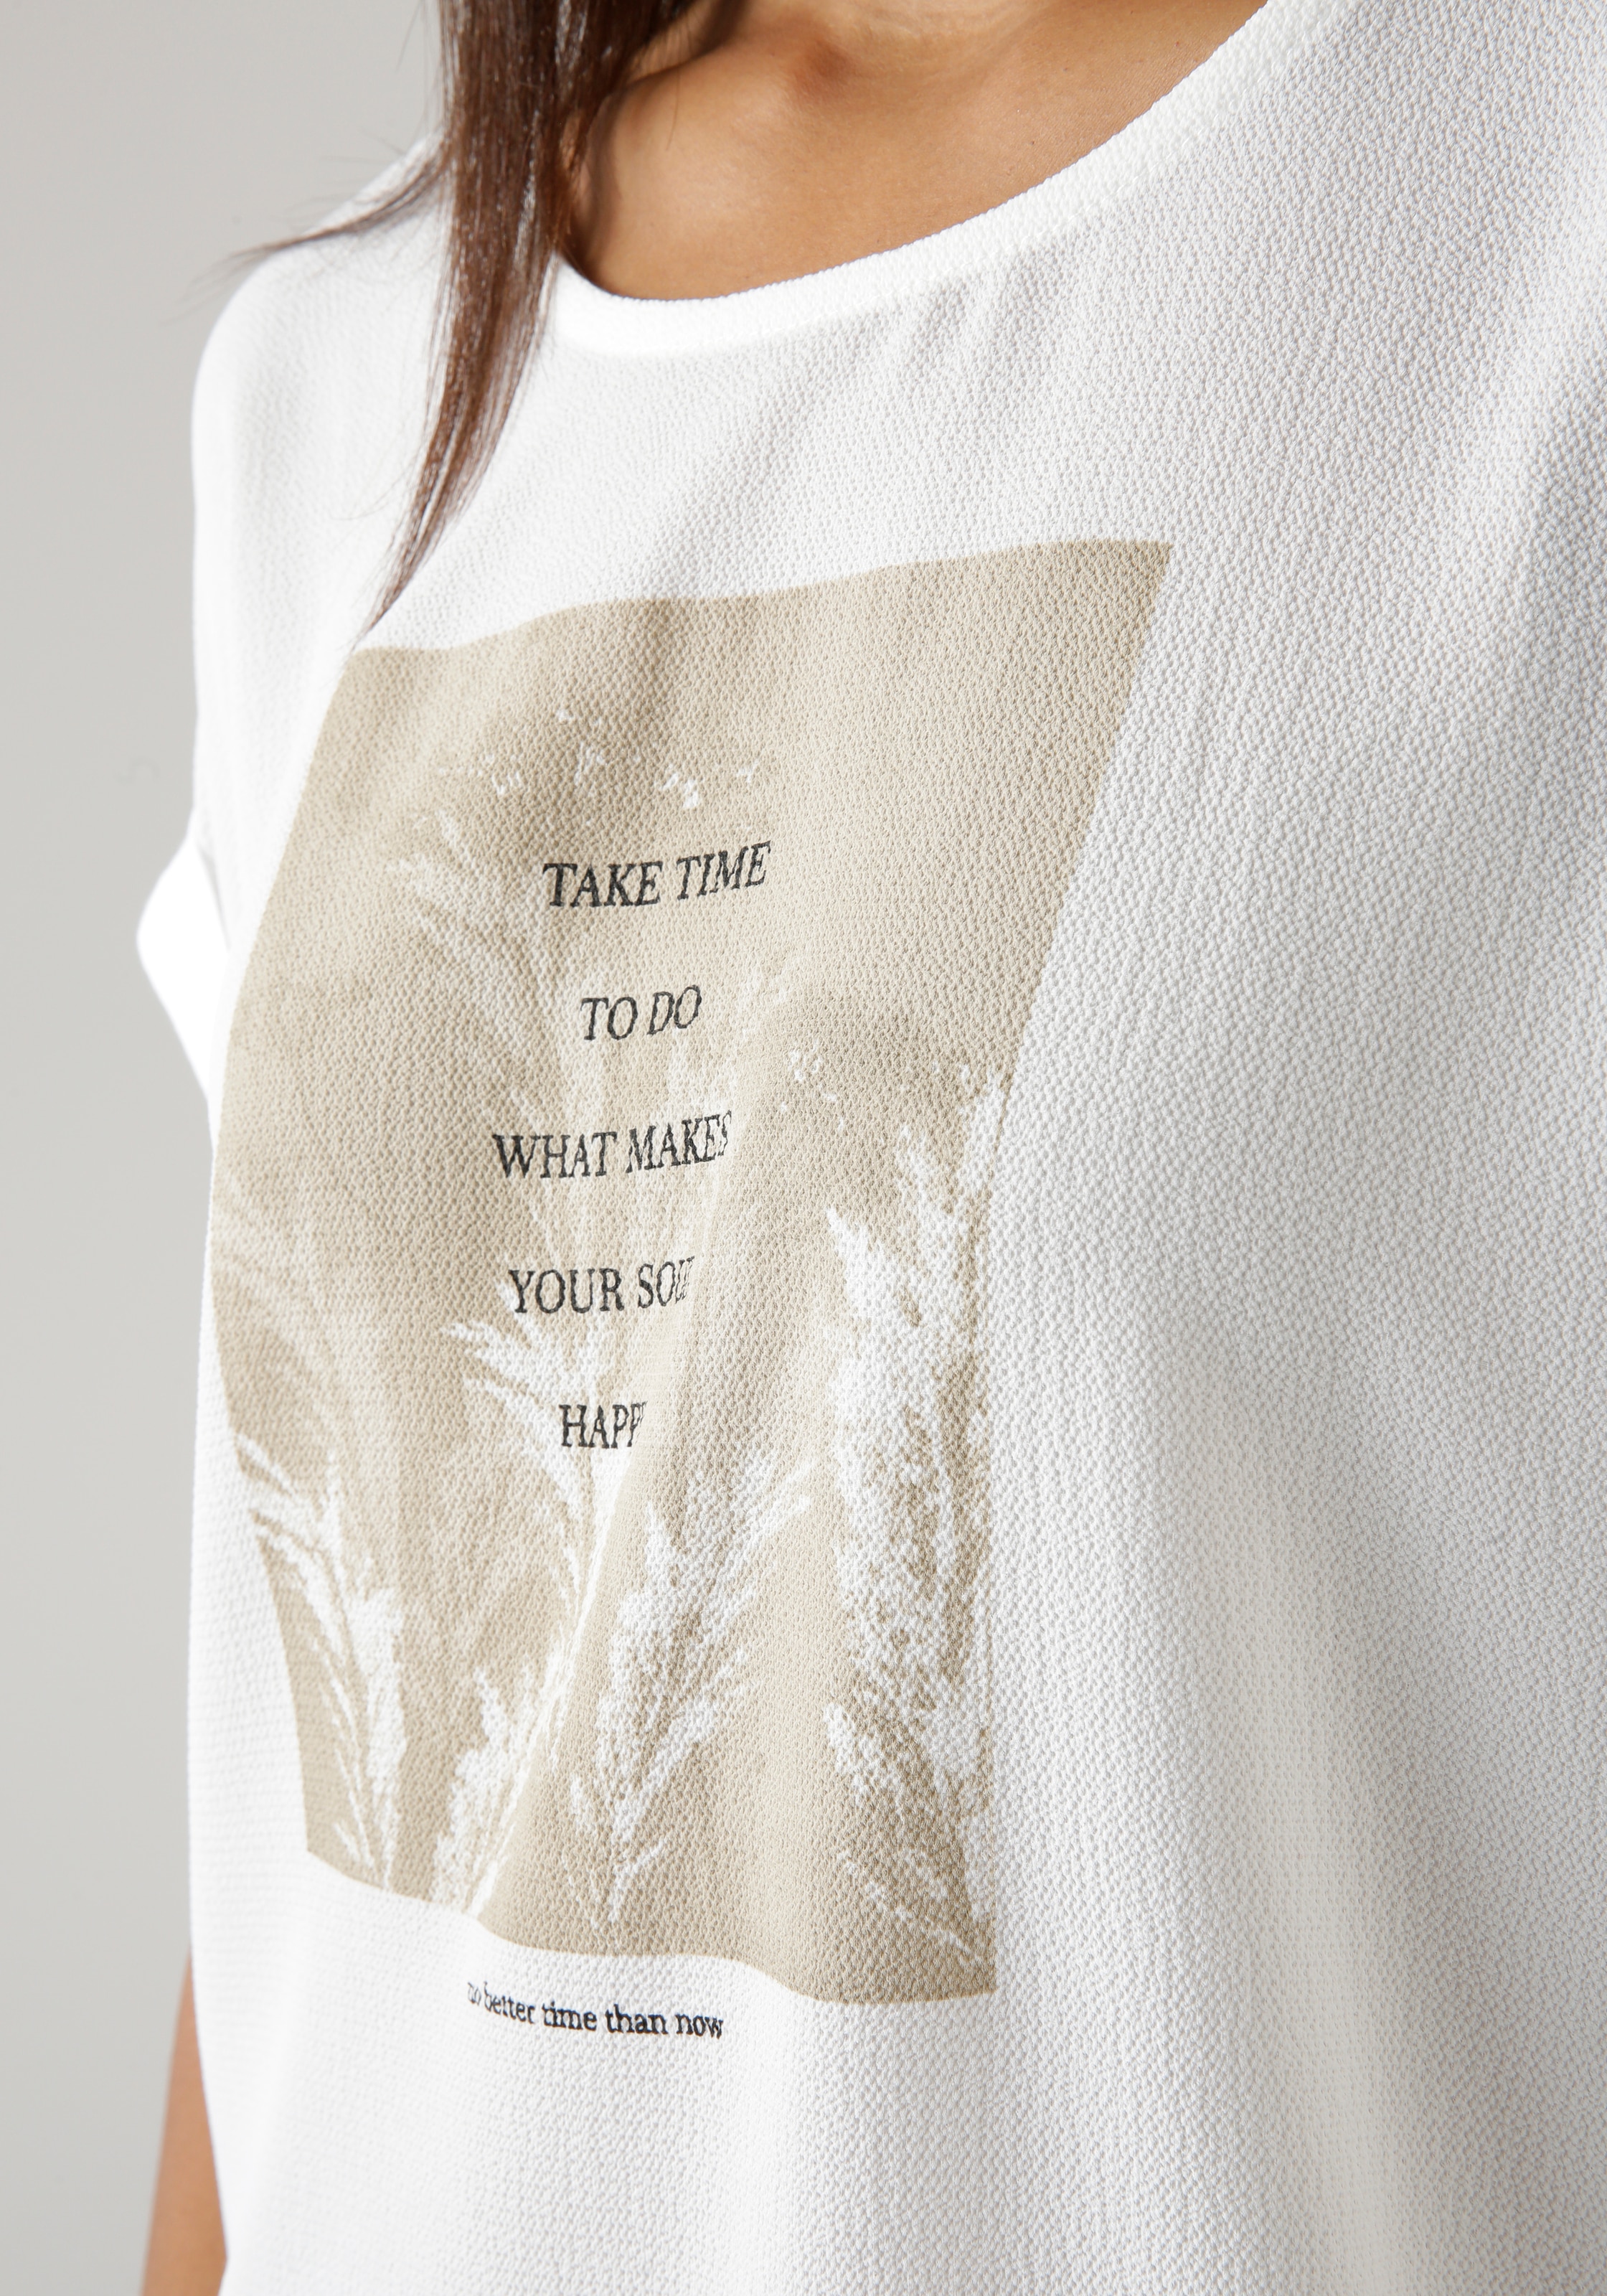 Aniston SELECTED angeschnittenen - mit Shirtbluse, OTTO Ärmeln NEUE KOLLEKTION bestellen bei